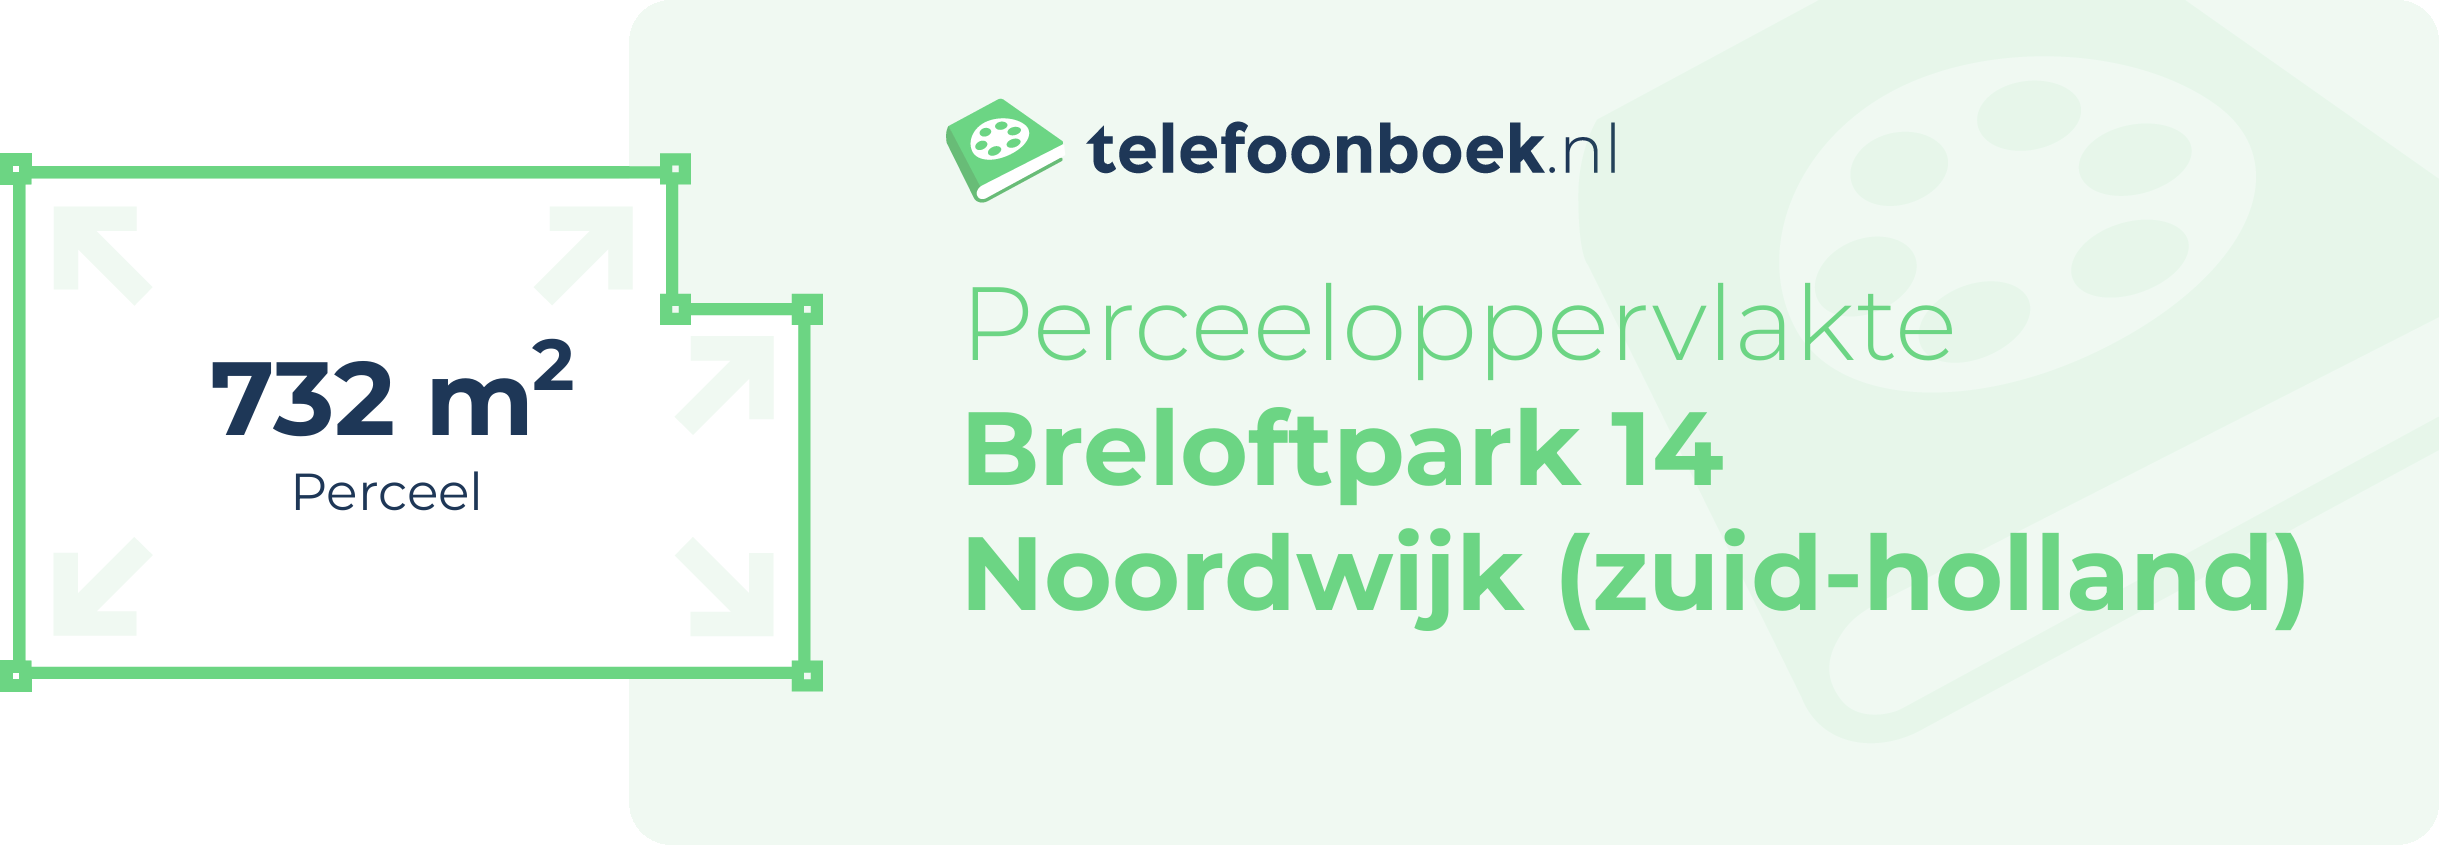 Perceeloppervlakte Breloftpark 14 Noordwijk (Zuid-Holland)